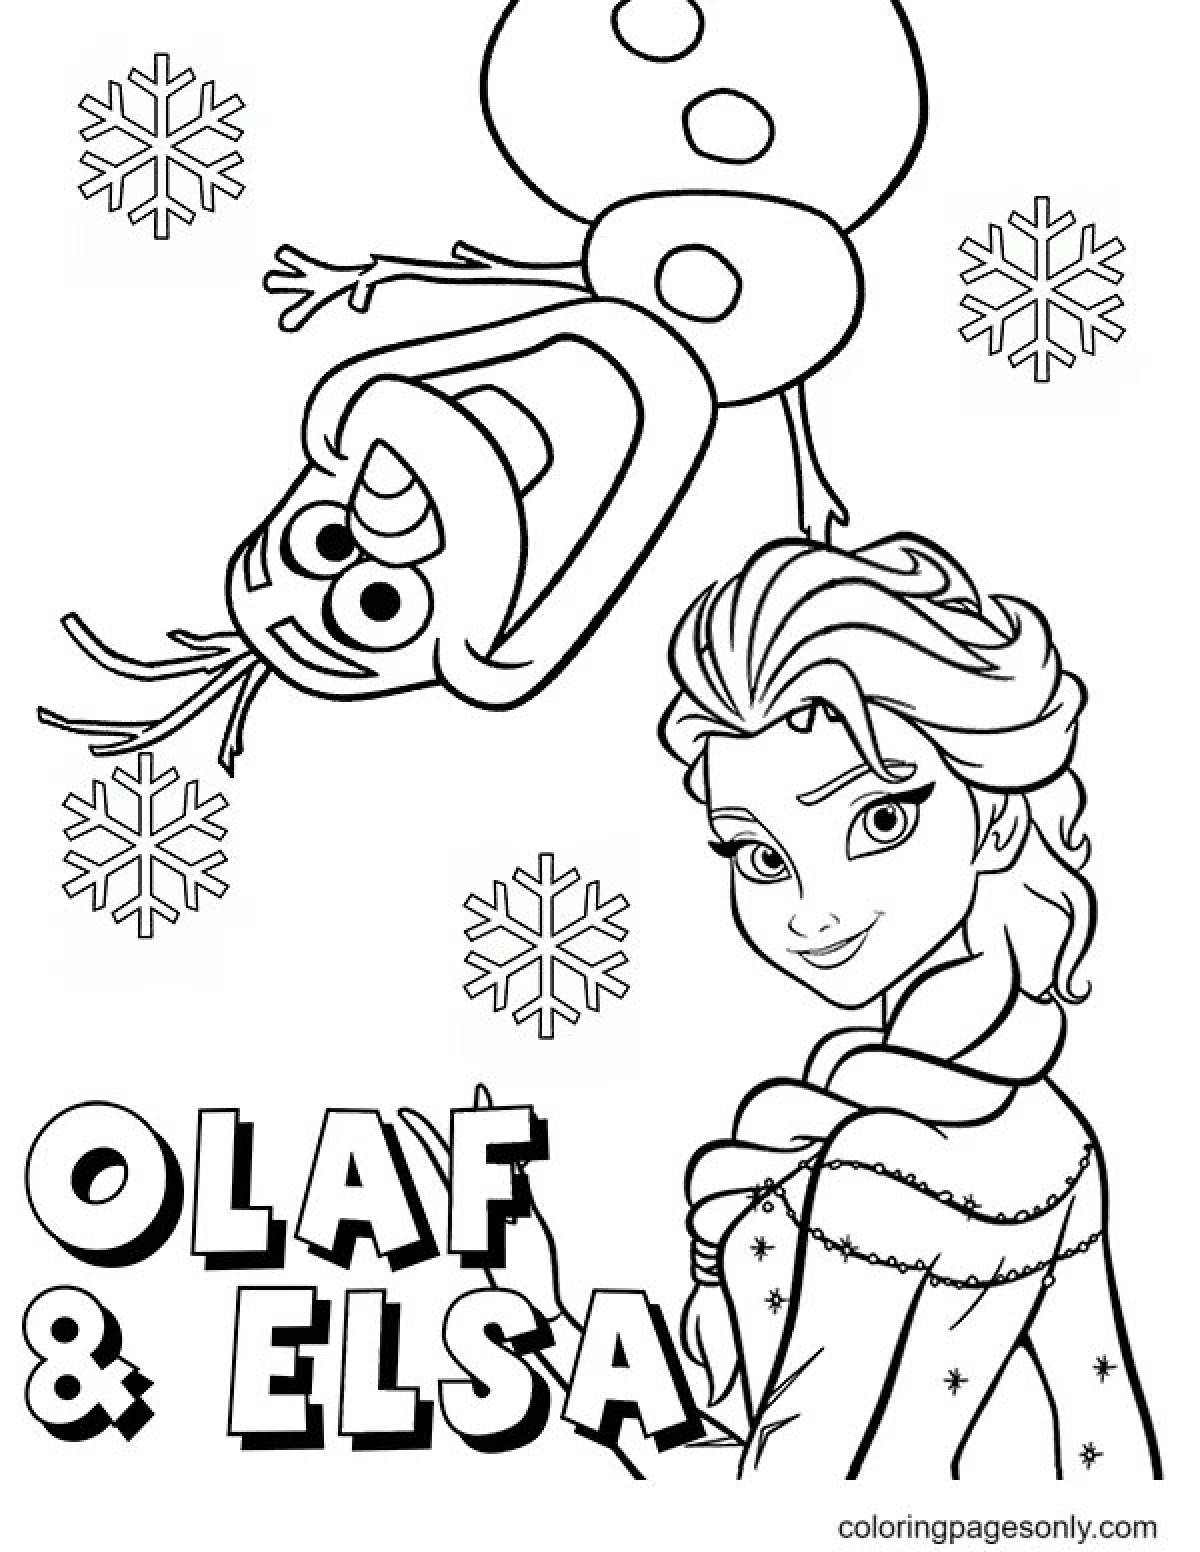 Elsa and olaf #6